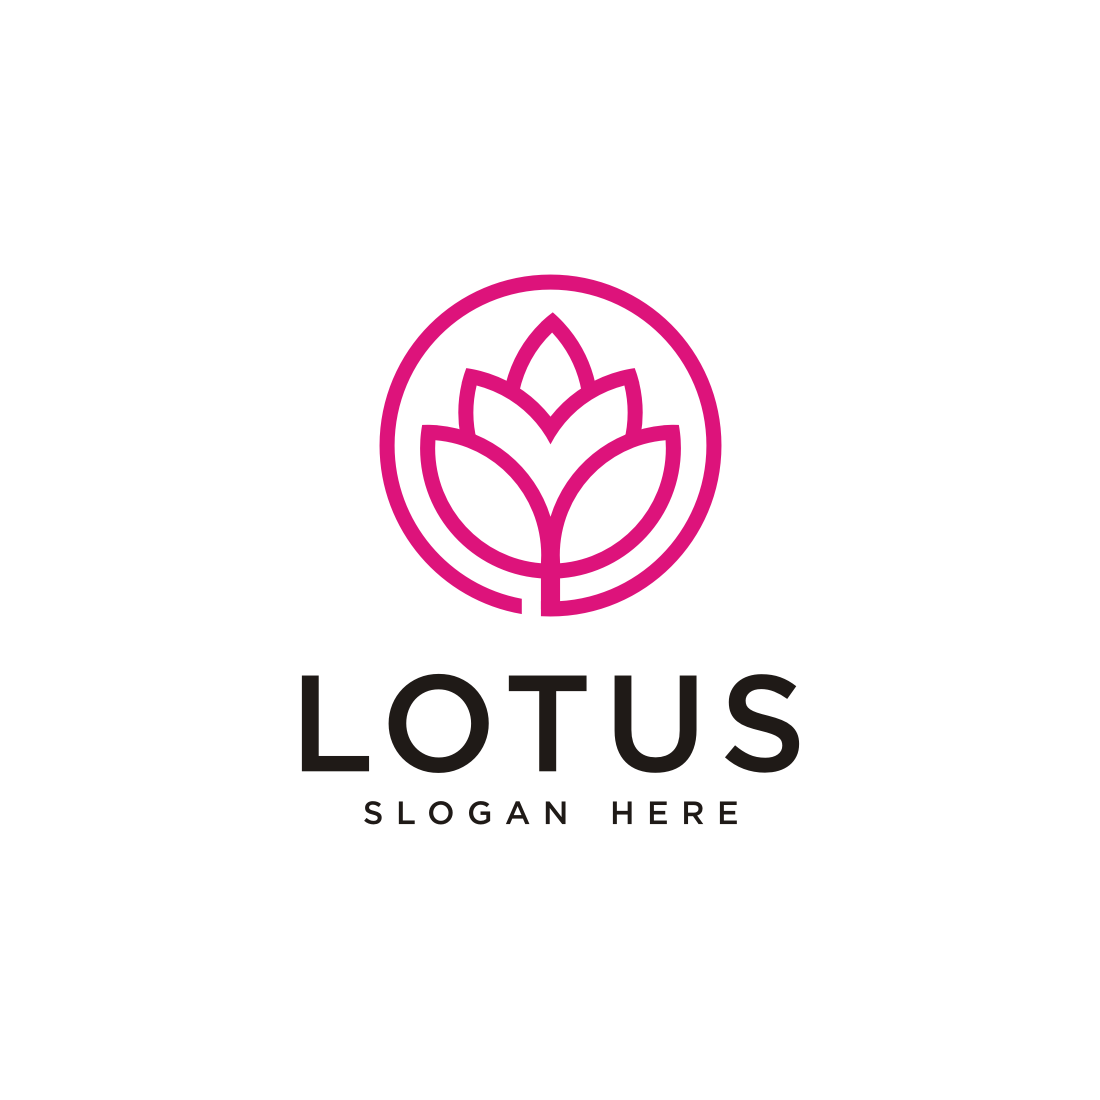 Lotus Logo PNG Transparent & SVG Vector - Freebie Supply